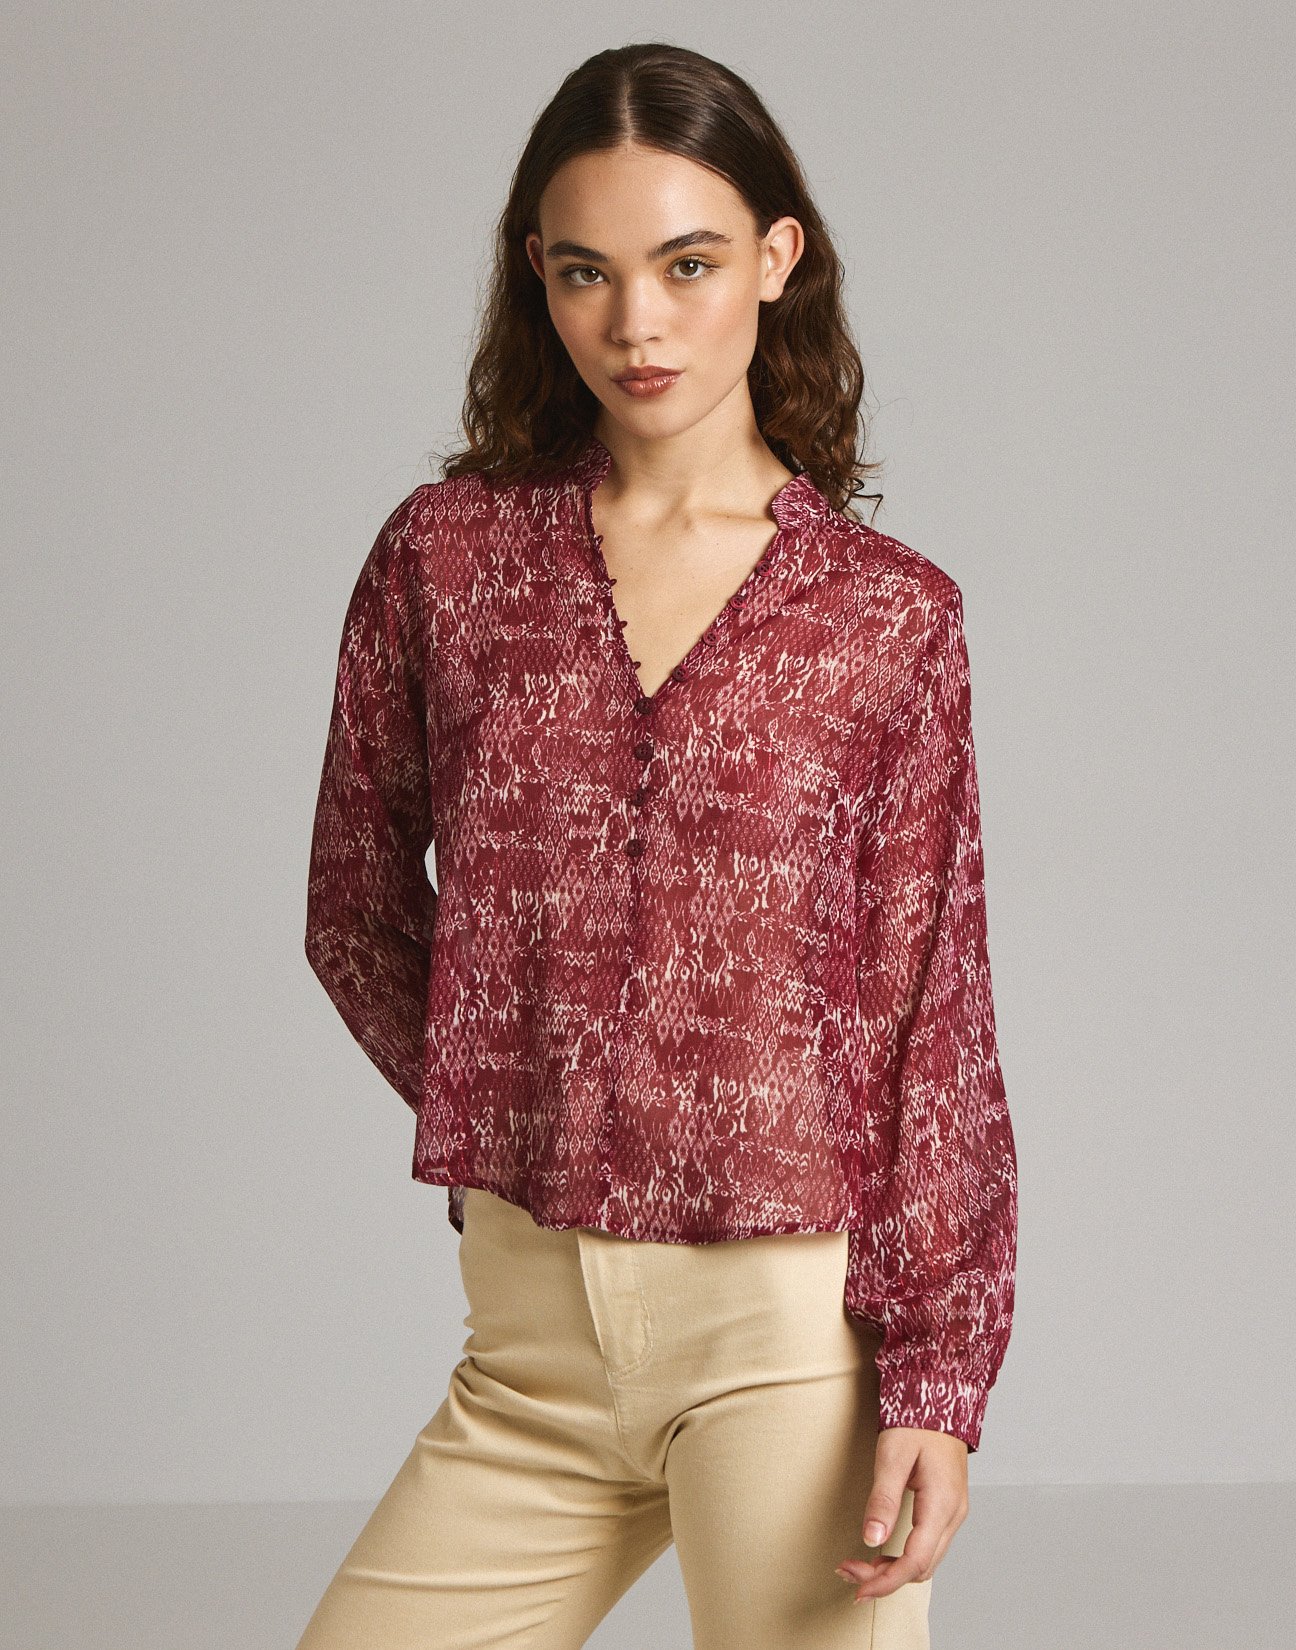 Sheered print blouse